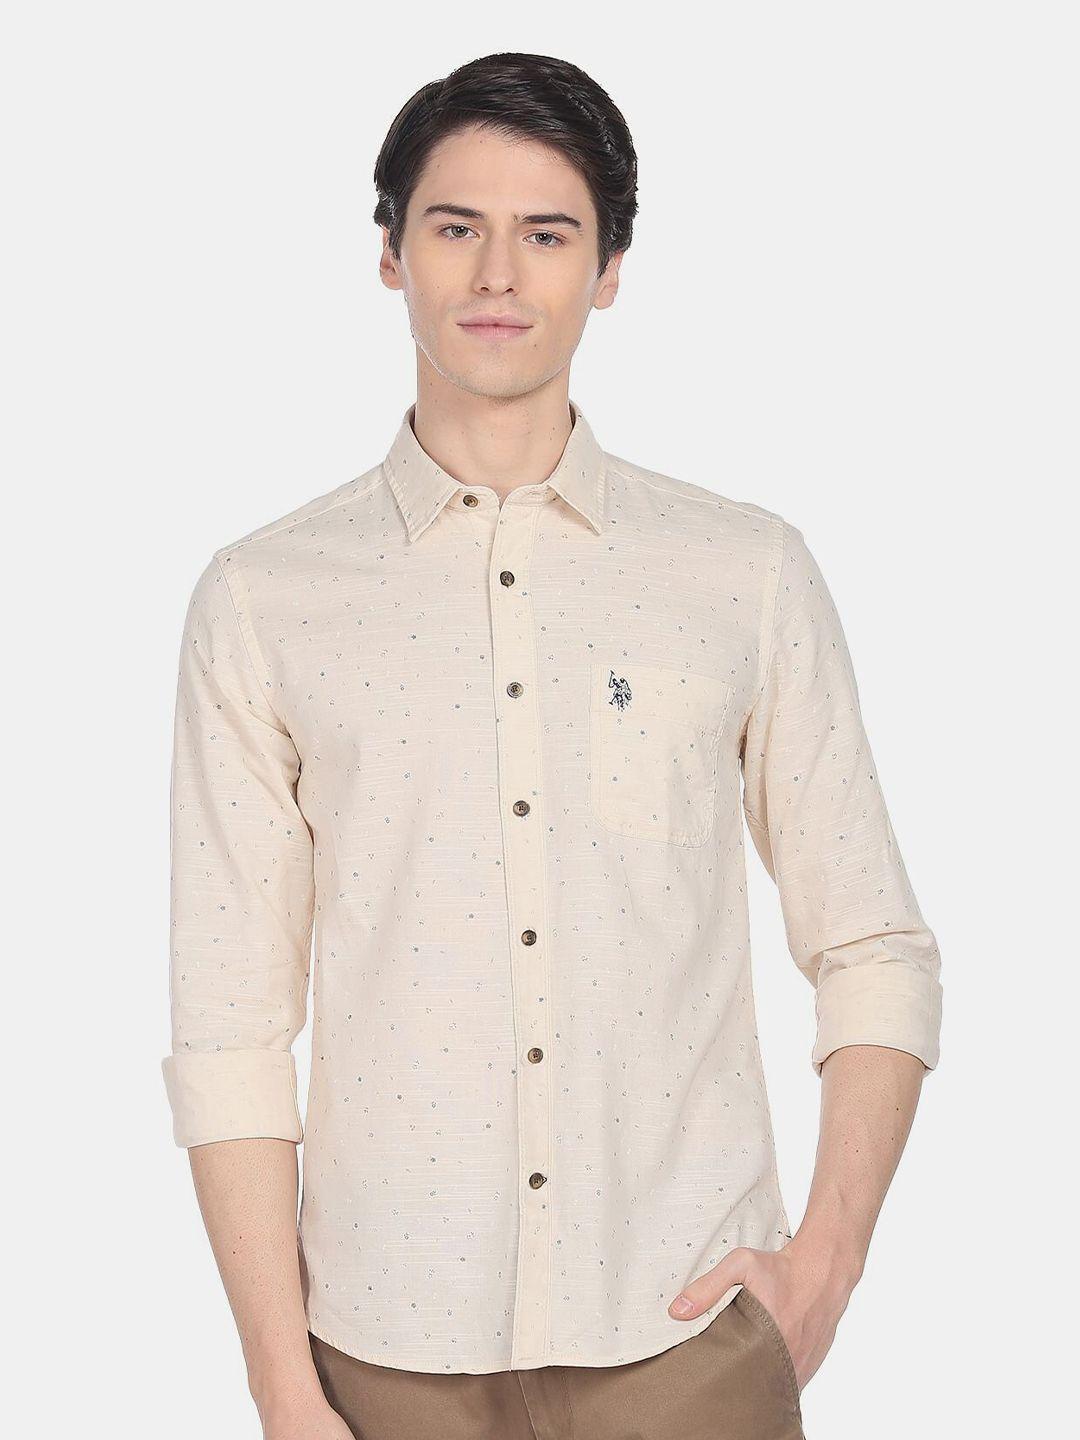 u.s. polo assn. denim co. men slim fit printed casual cotton shirt